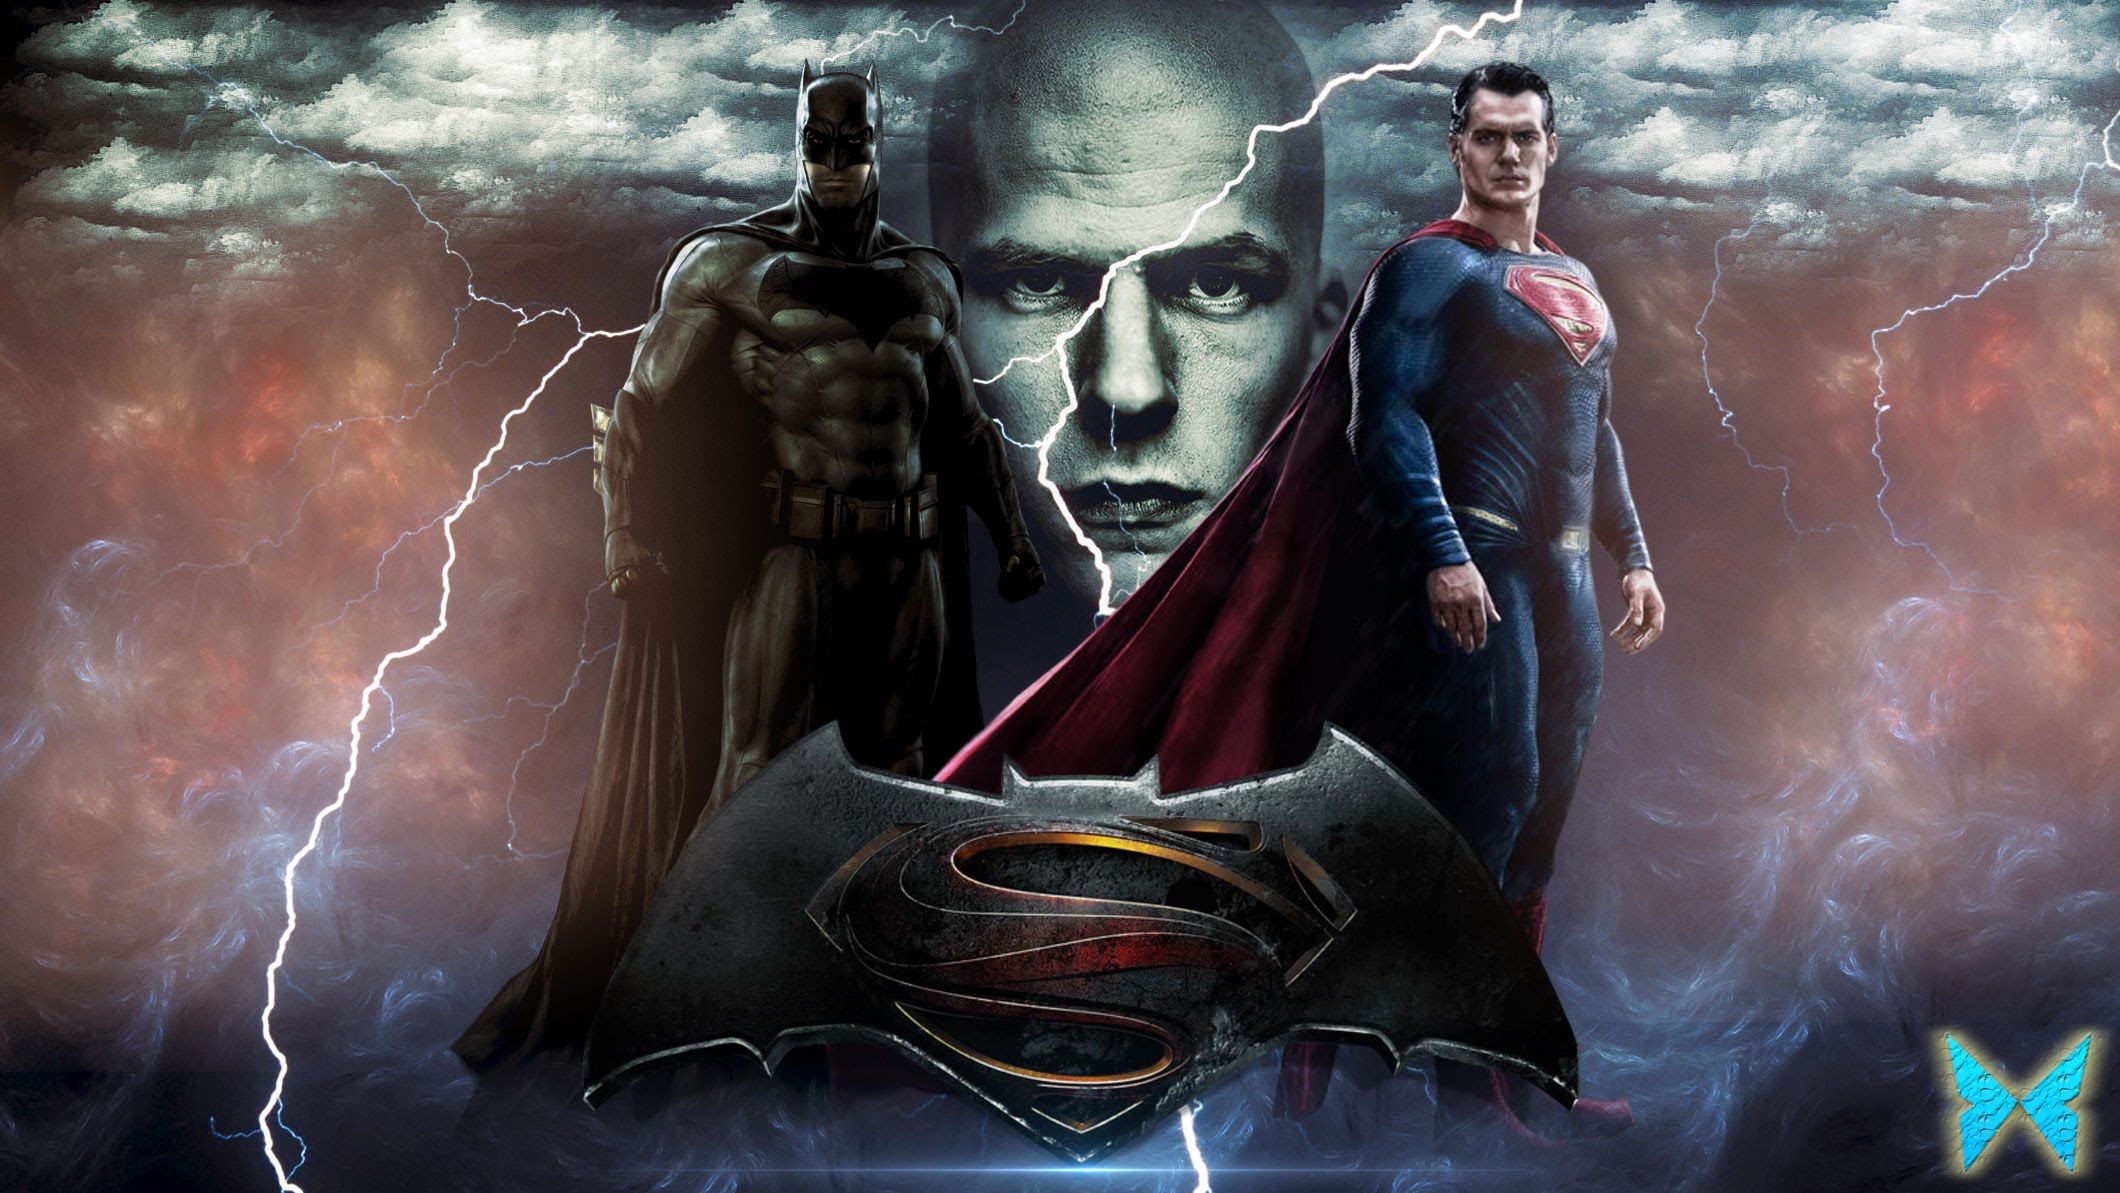 Download Download Batman Vs Superman Wallpaper For Android #bmRnX